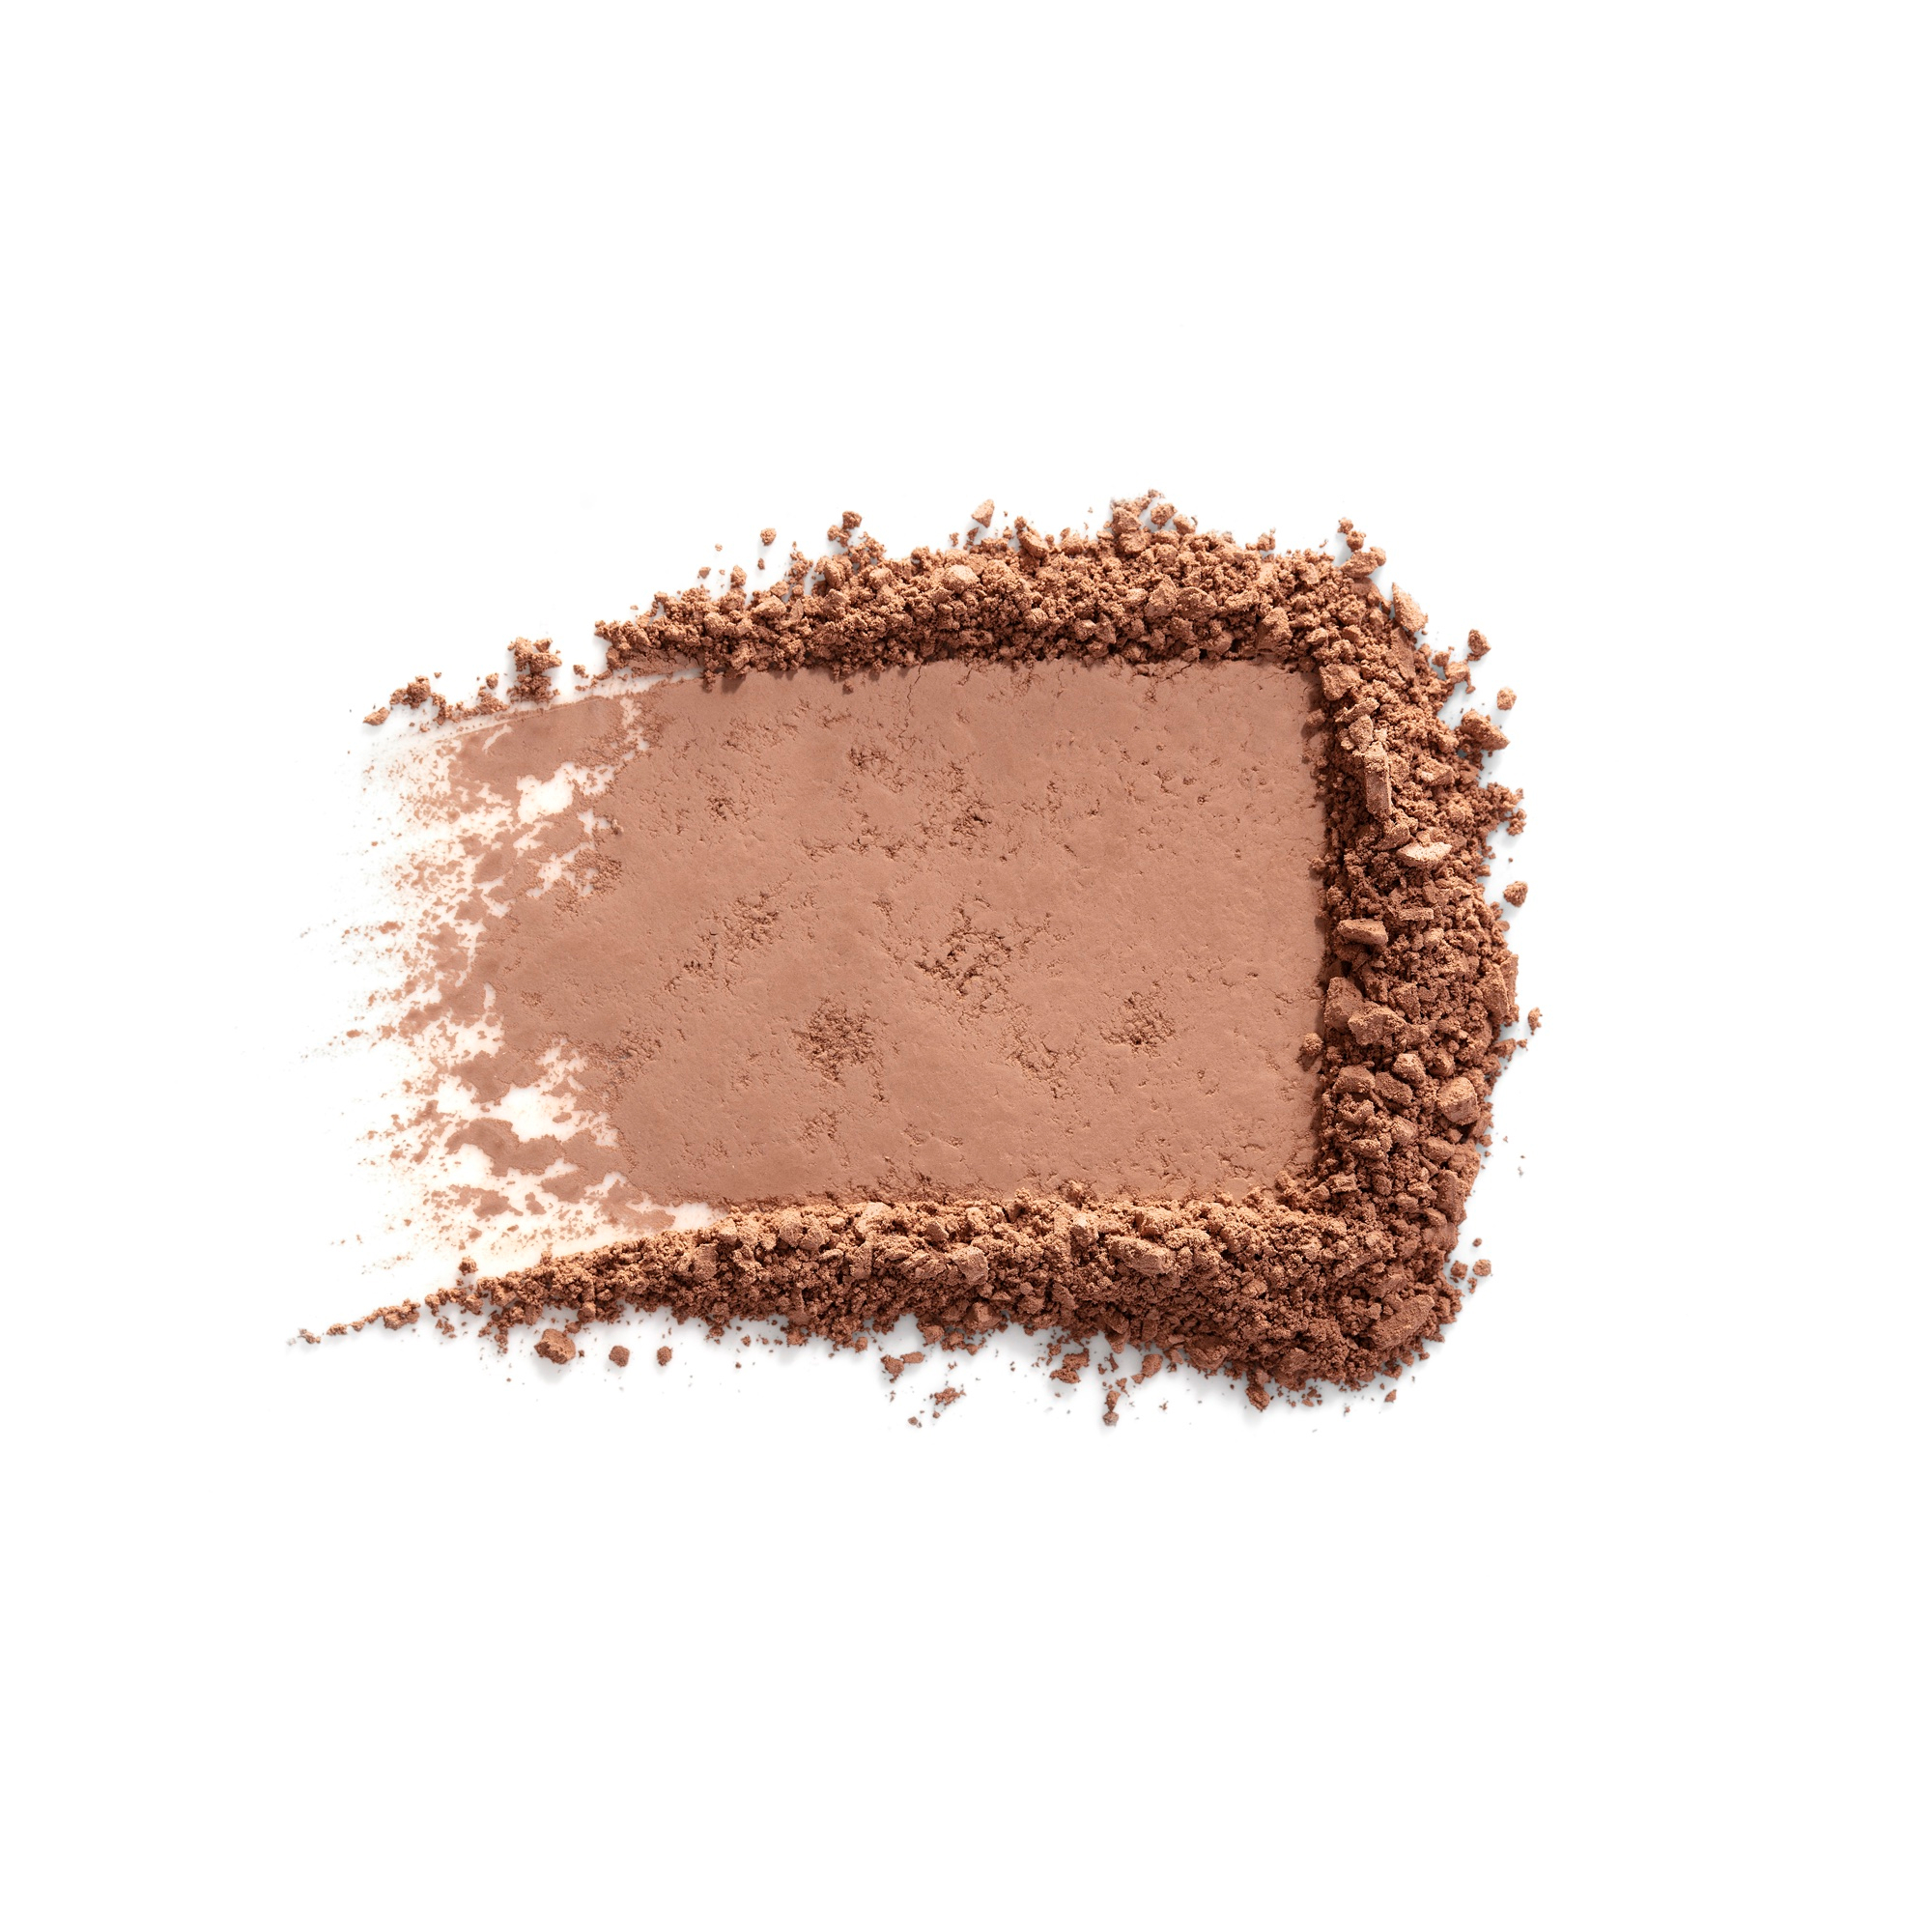 Benefit Cosmetics Matte Bronzer - Illuminating Powder Contouring In Hoola, Size: Full Size